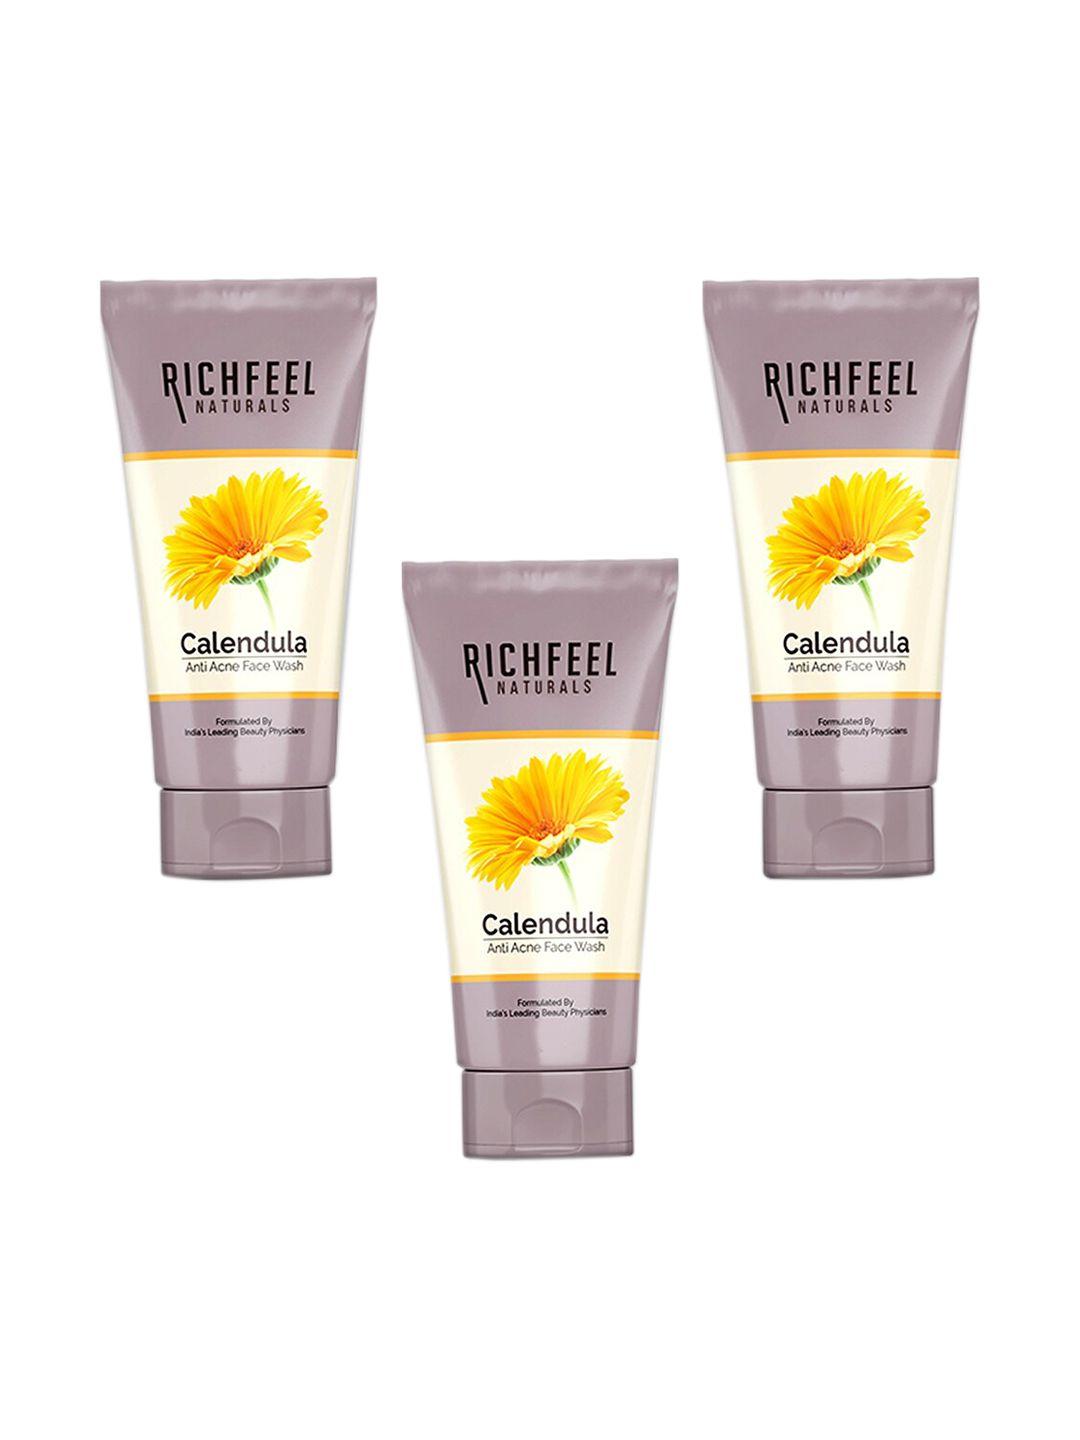 richfeel set of 3 calendula anti-acne face wash - 100 g each